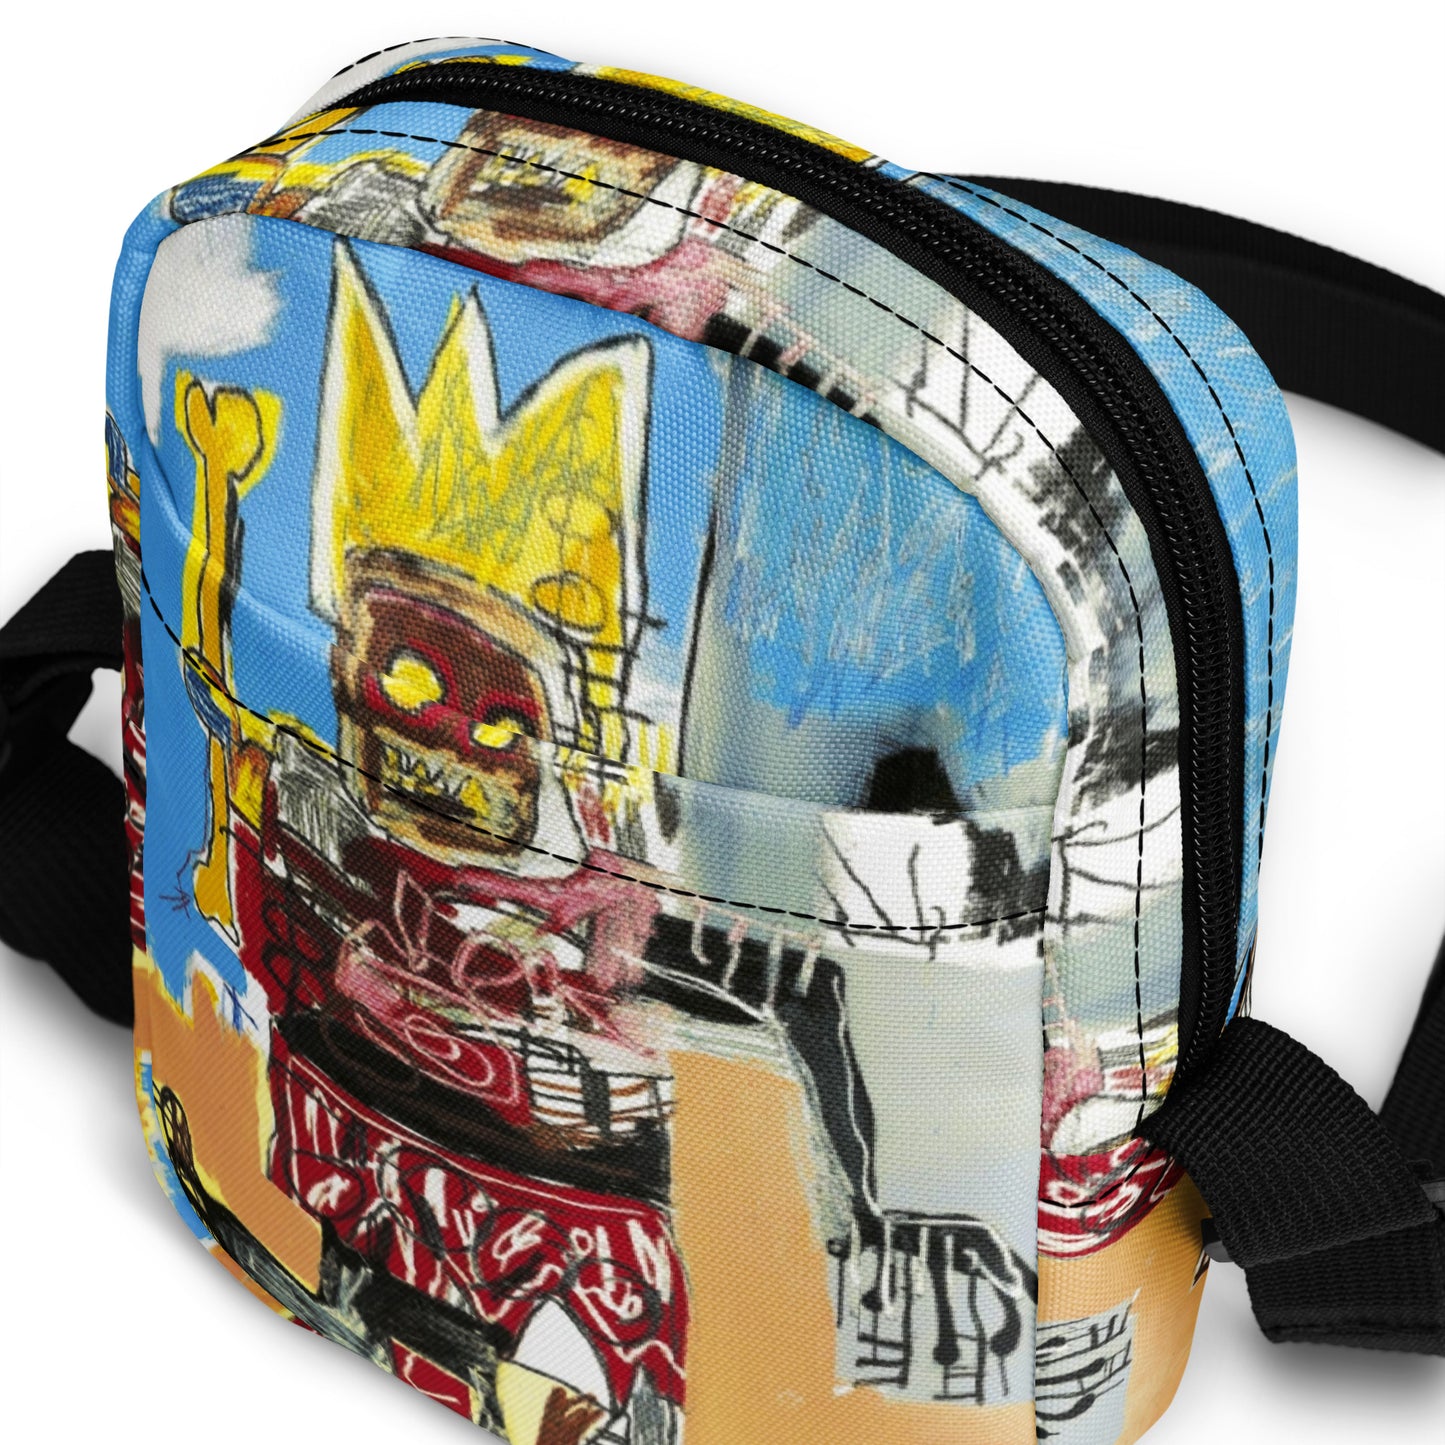 Jean-Michel Basquiat "Untitled" Artwork Bag